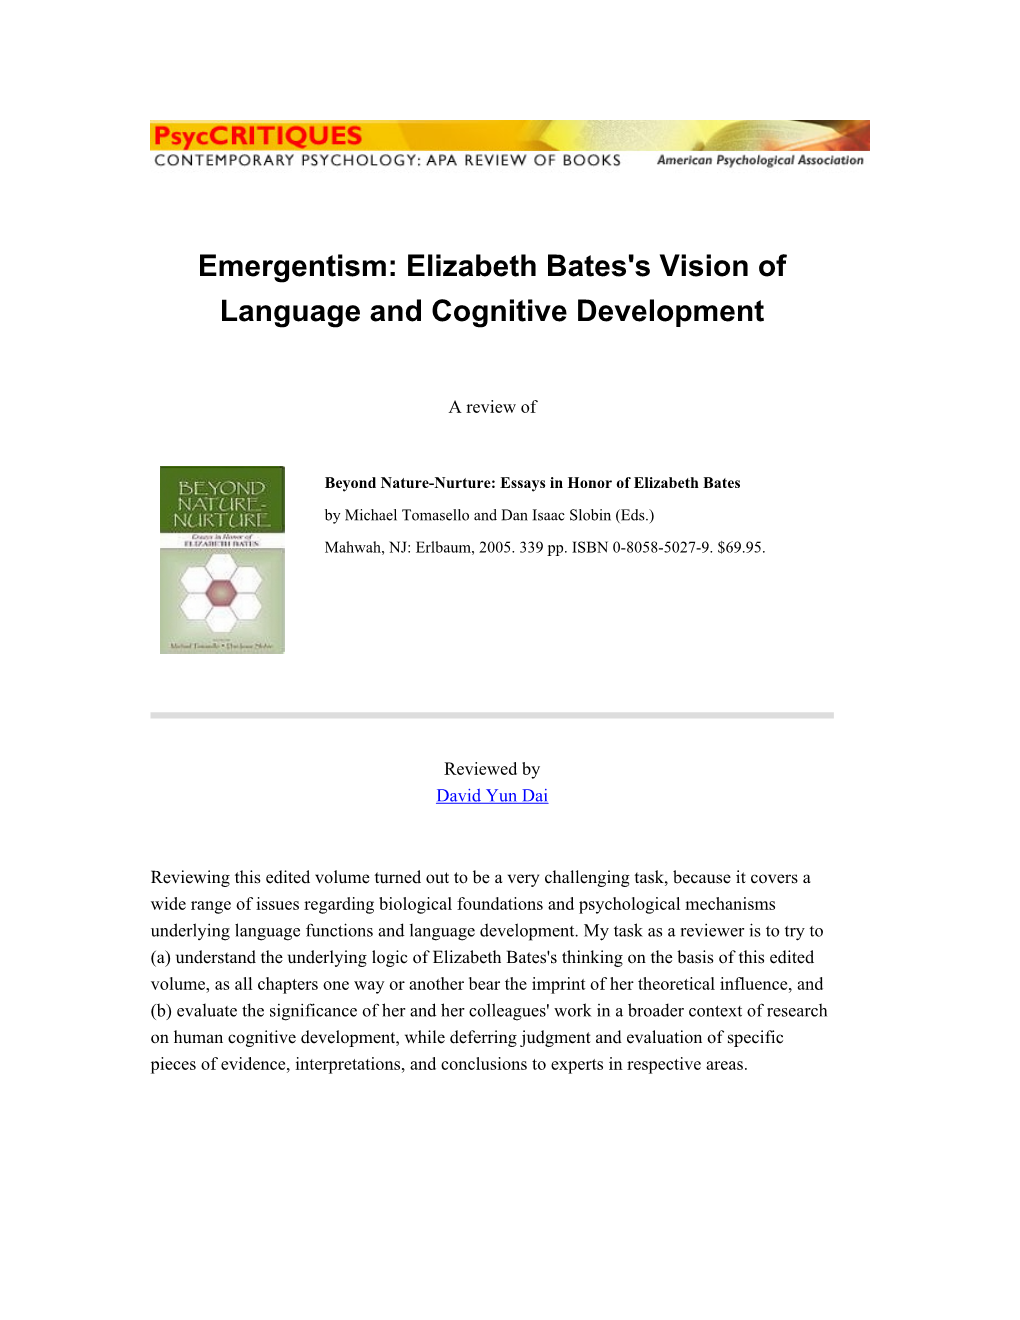 Emergentism: Elizabeth Bates's Vision of Language and Cognitive Development